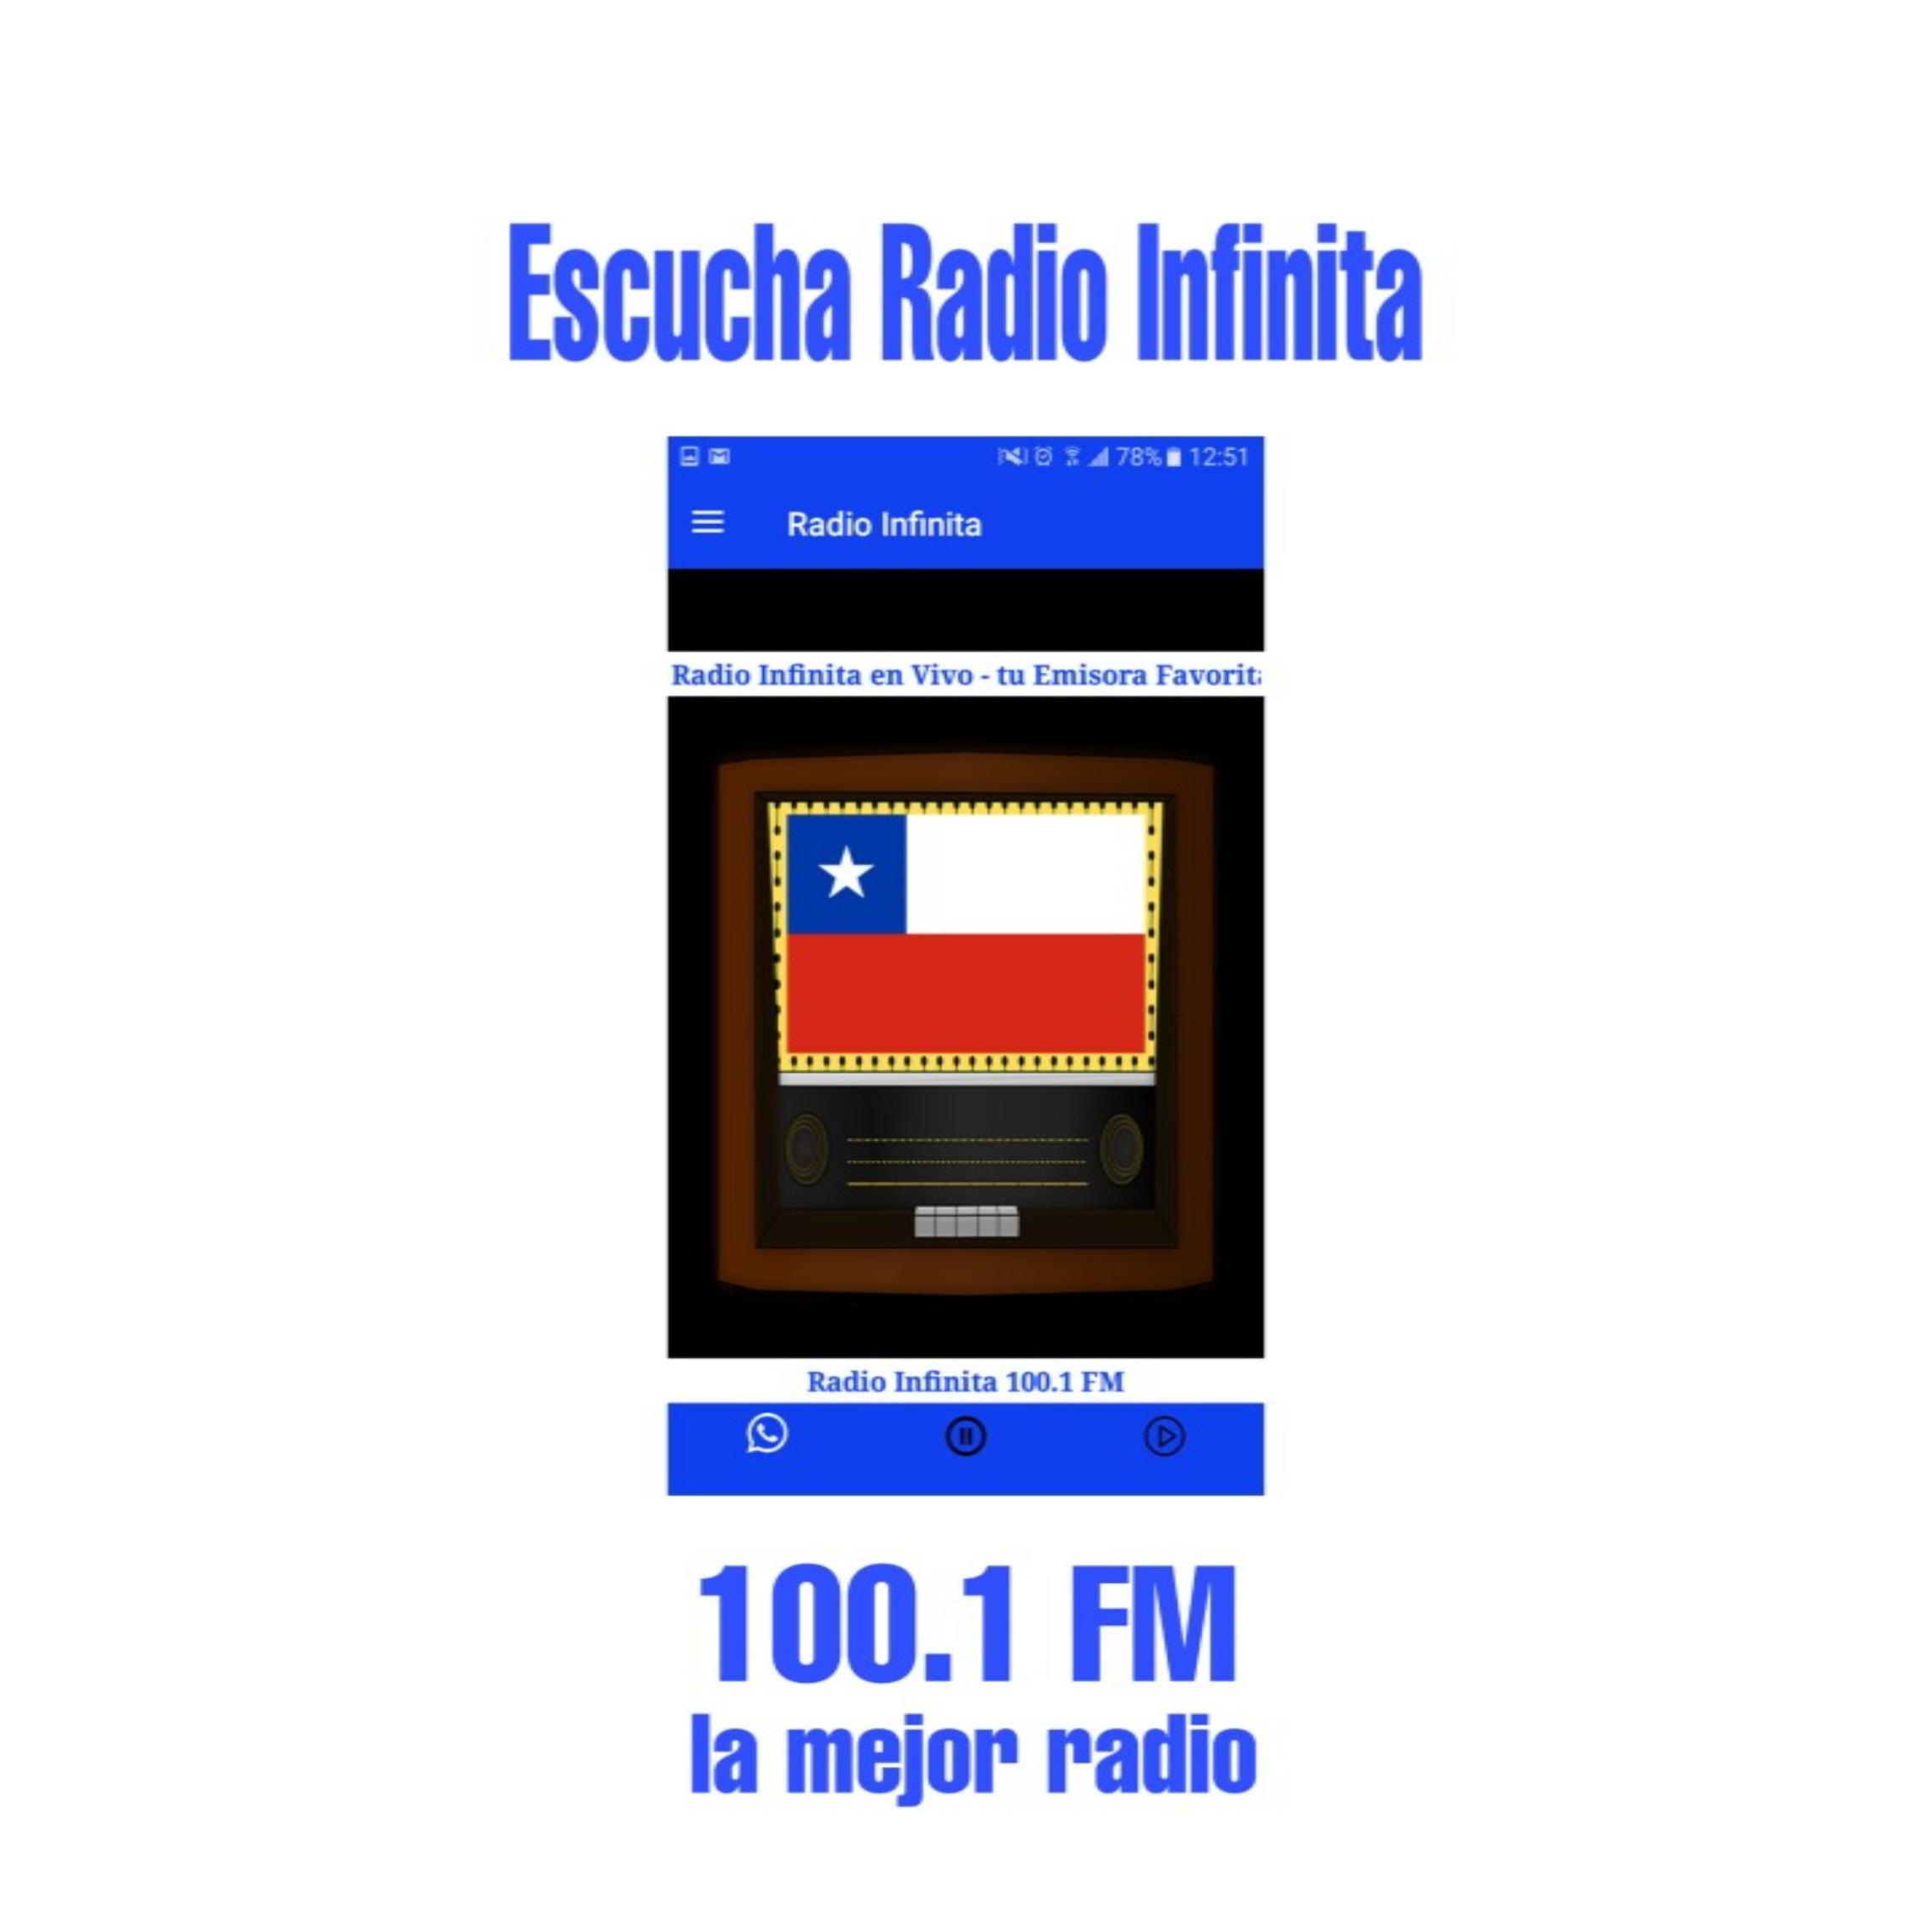 Radio Infinita Chile - radio fm online gratis for Android - APK Download